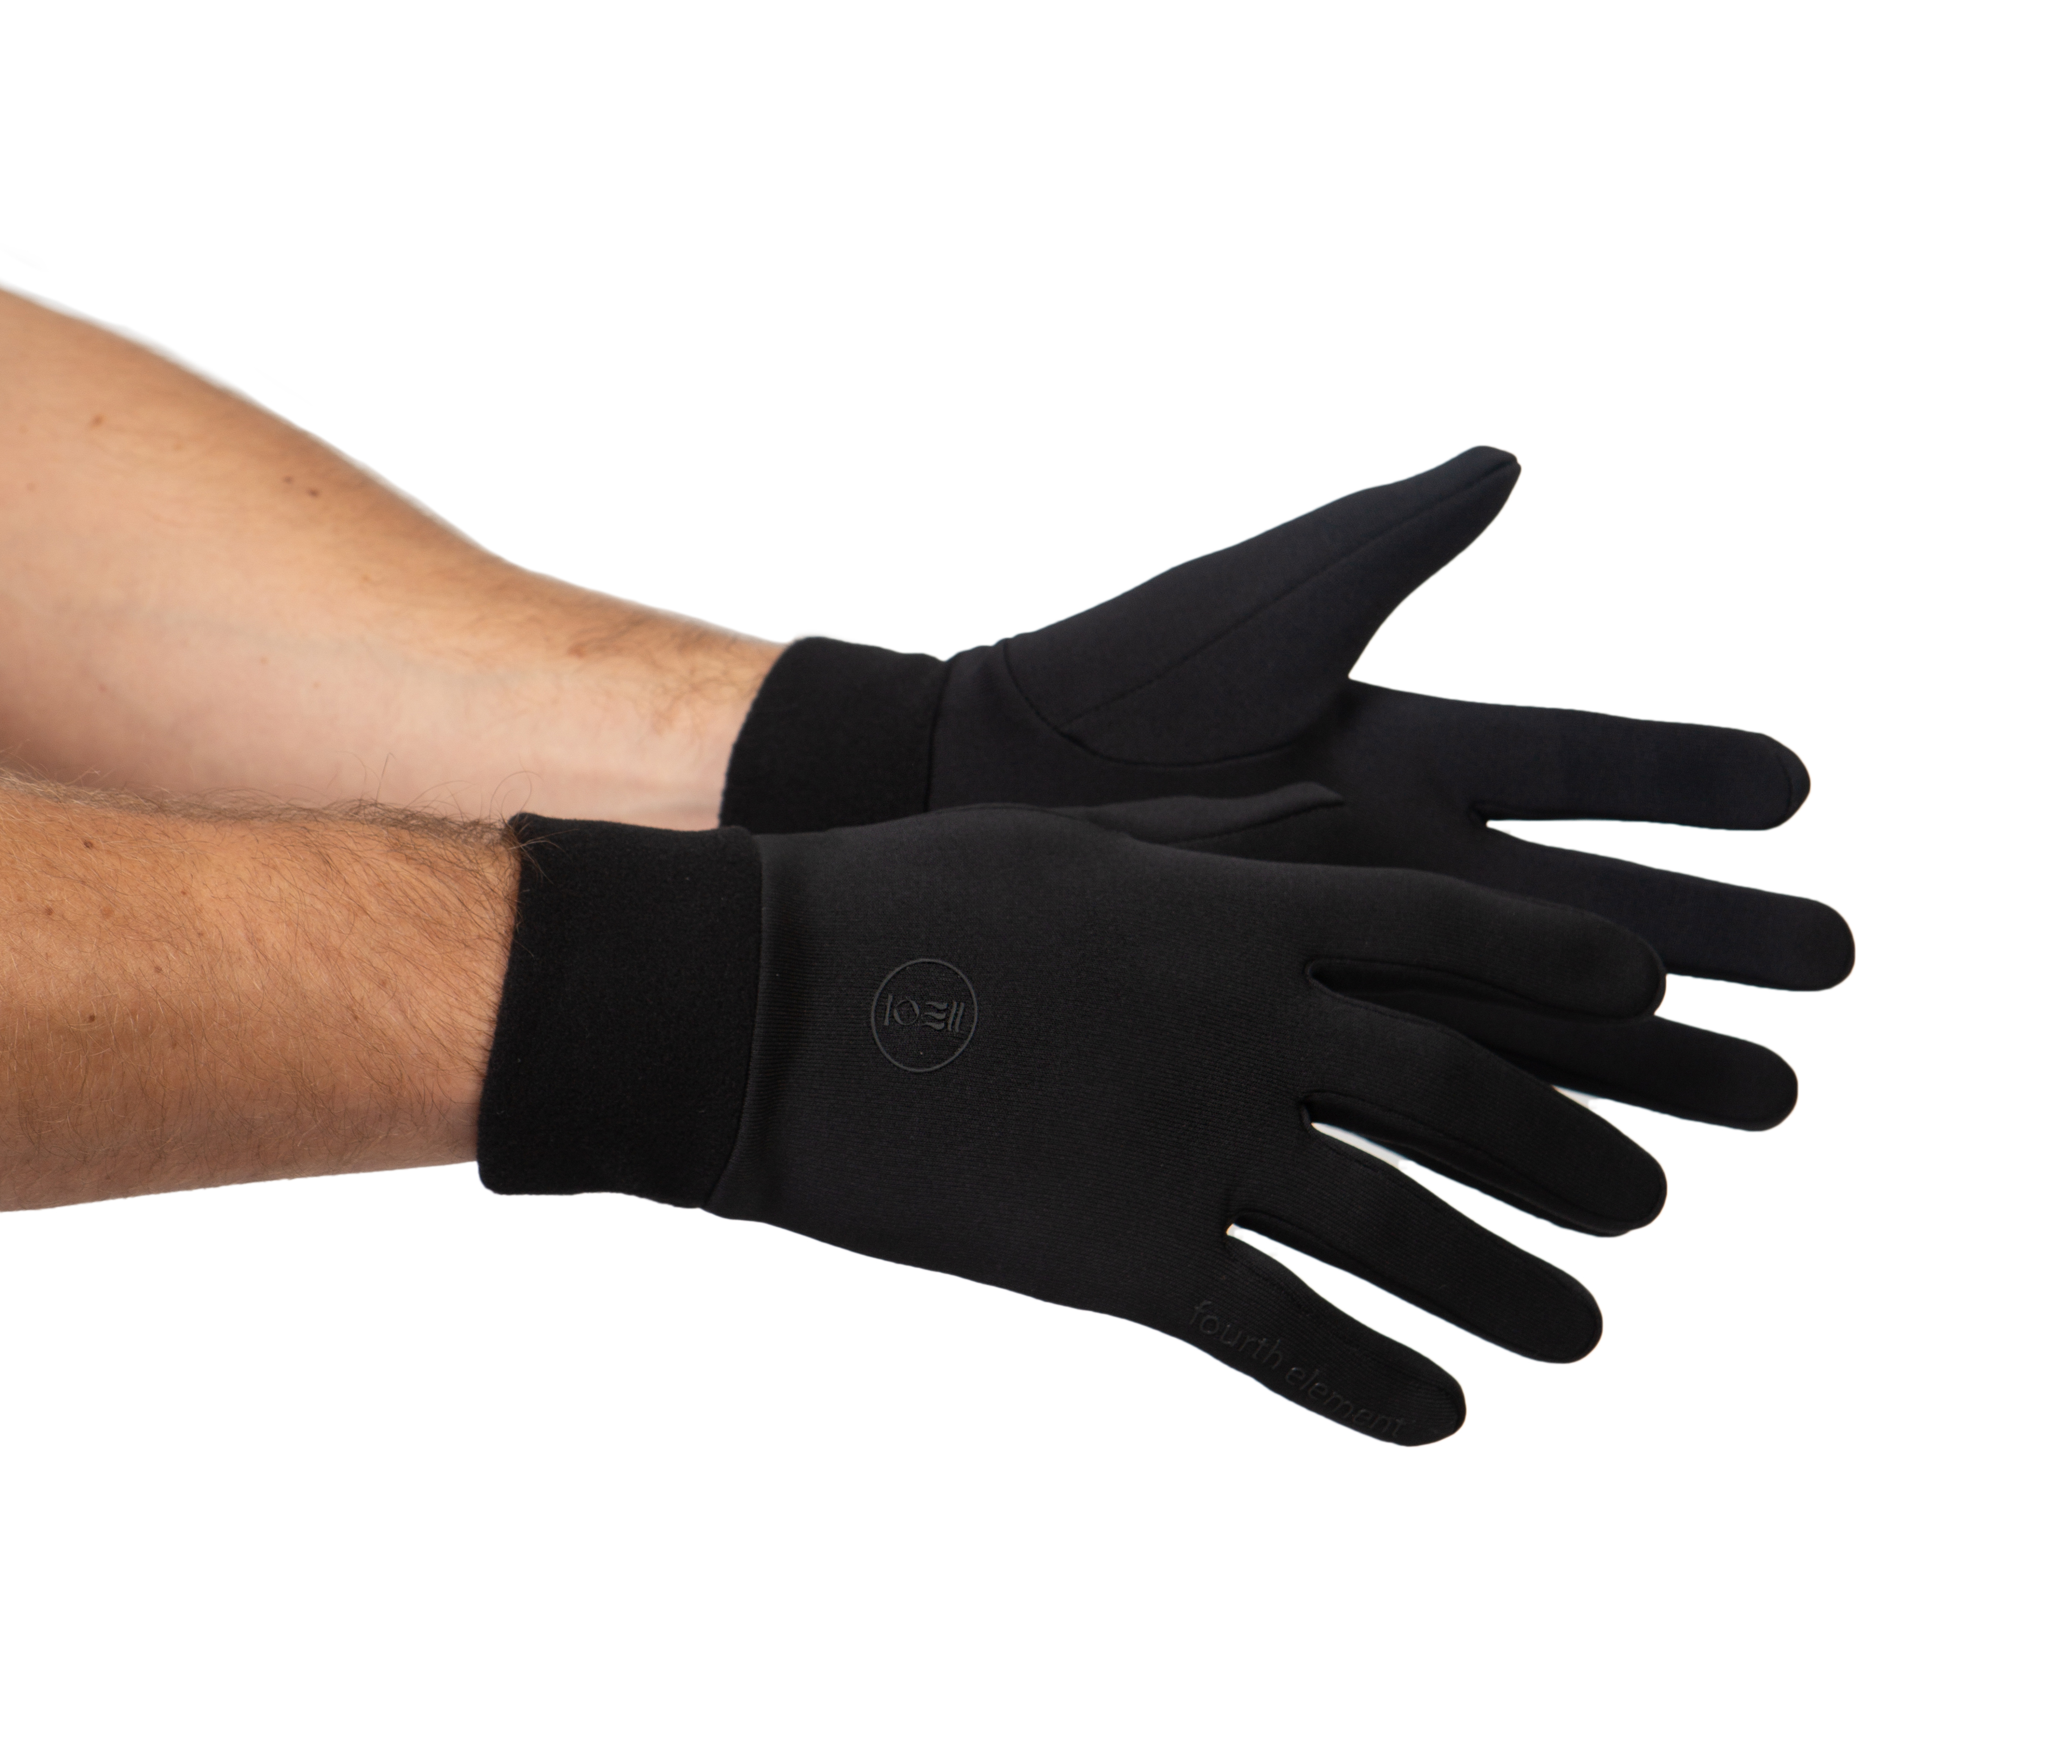 Fourth Element Xerotherm Gloves